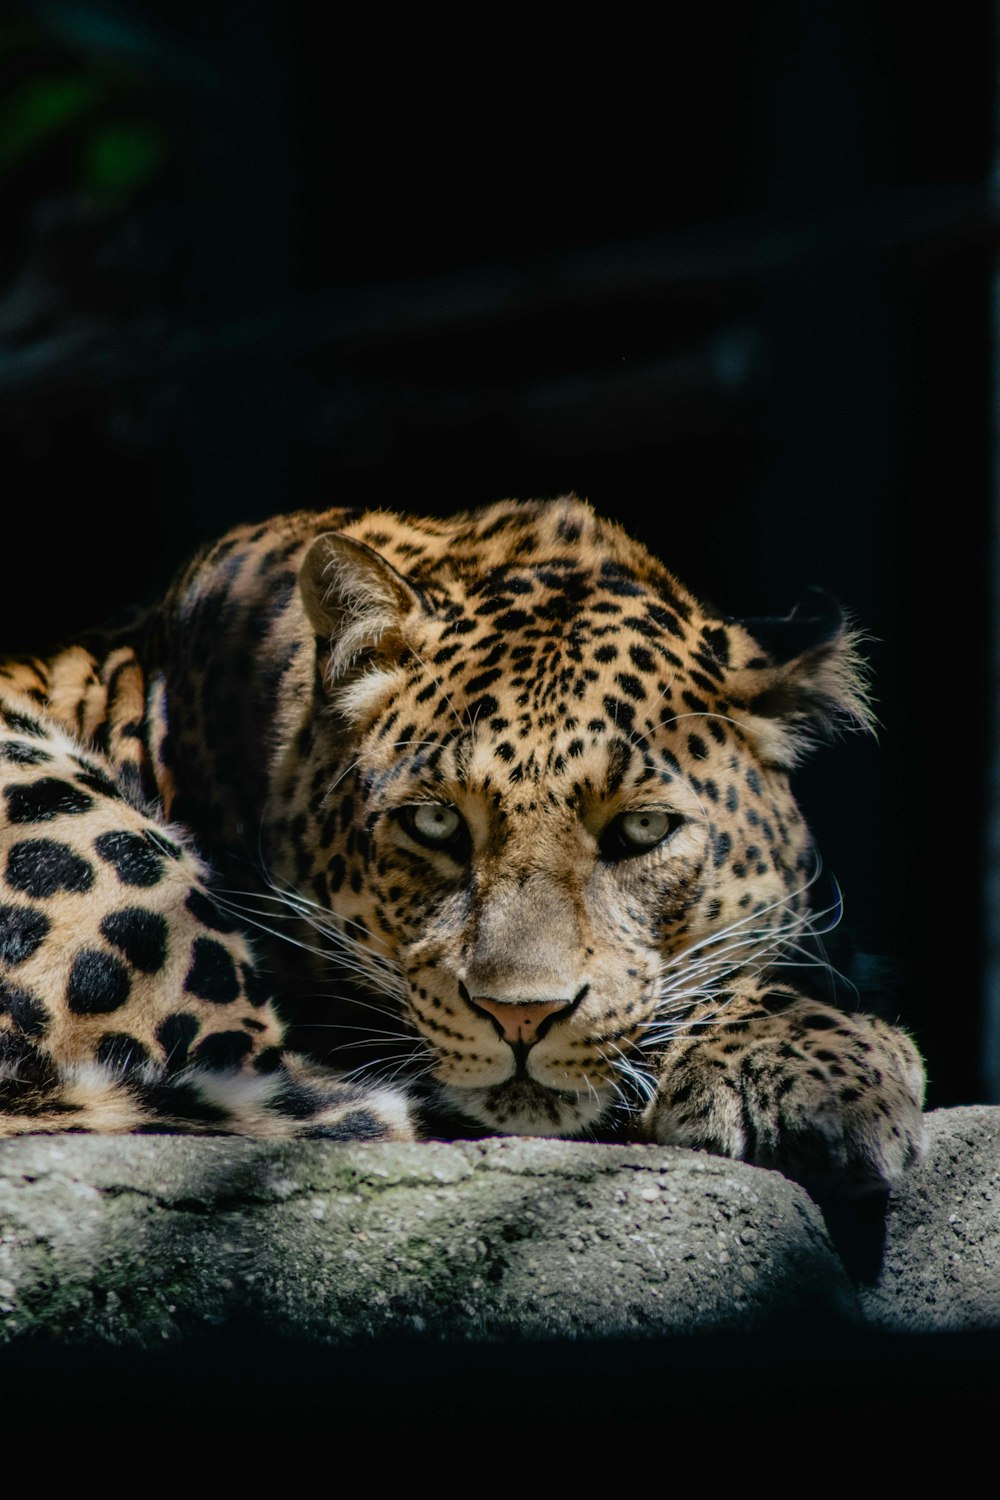 adult jaguar lying on stone